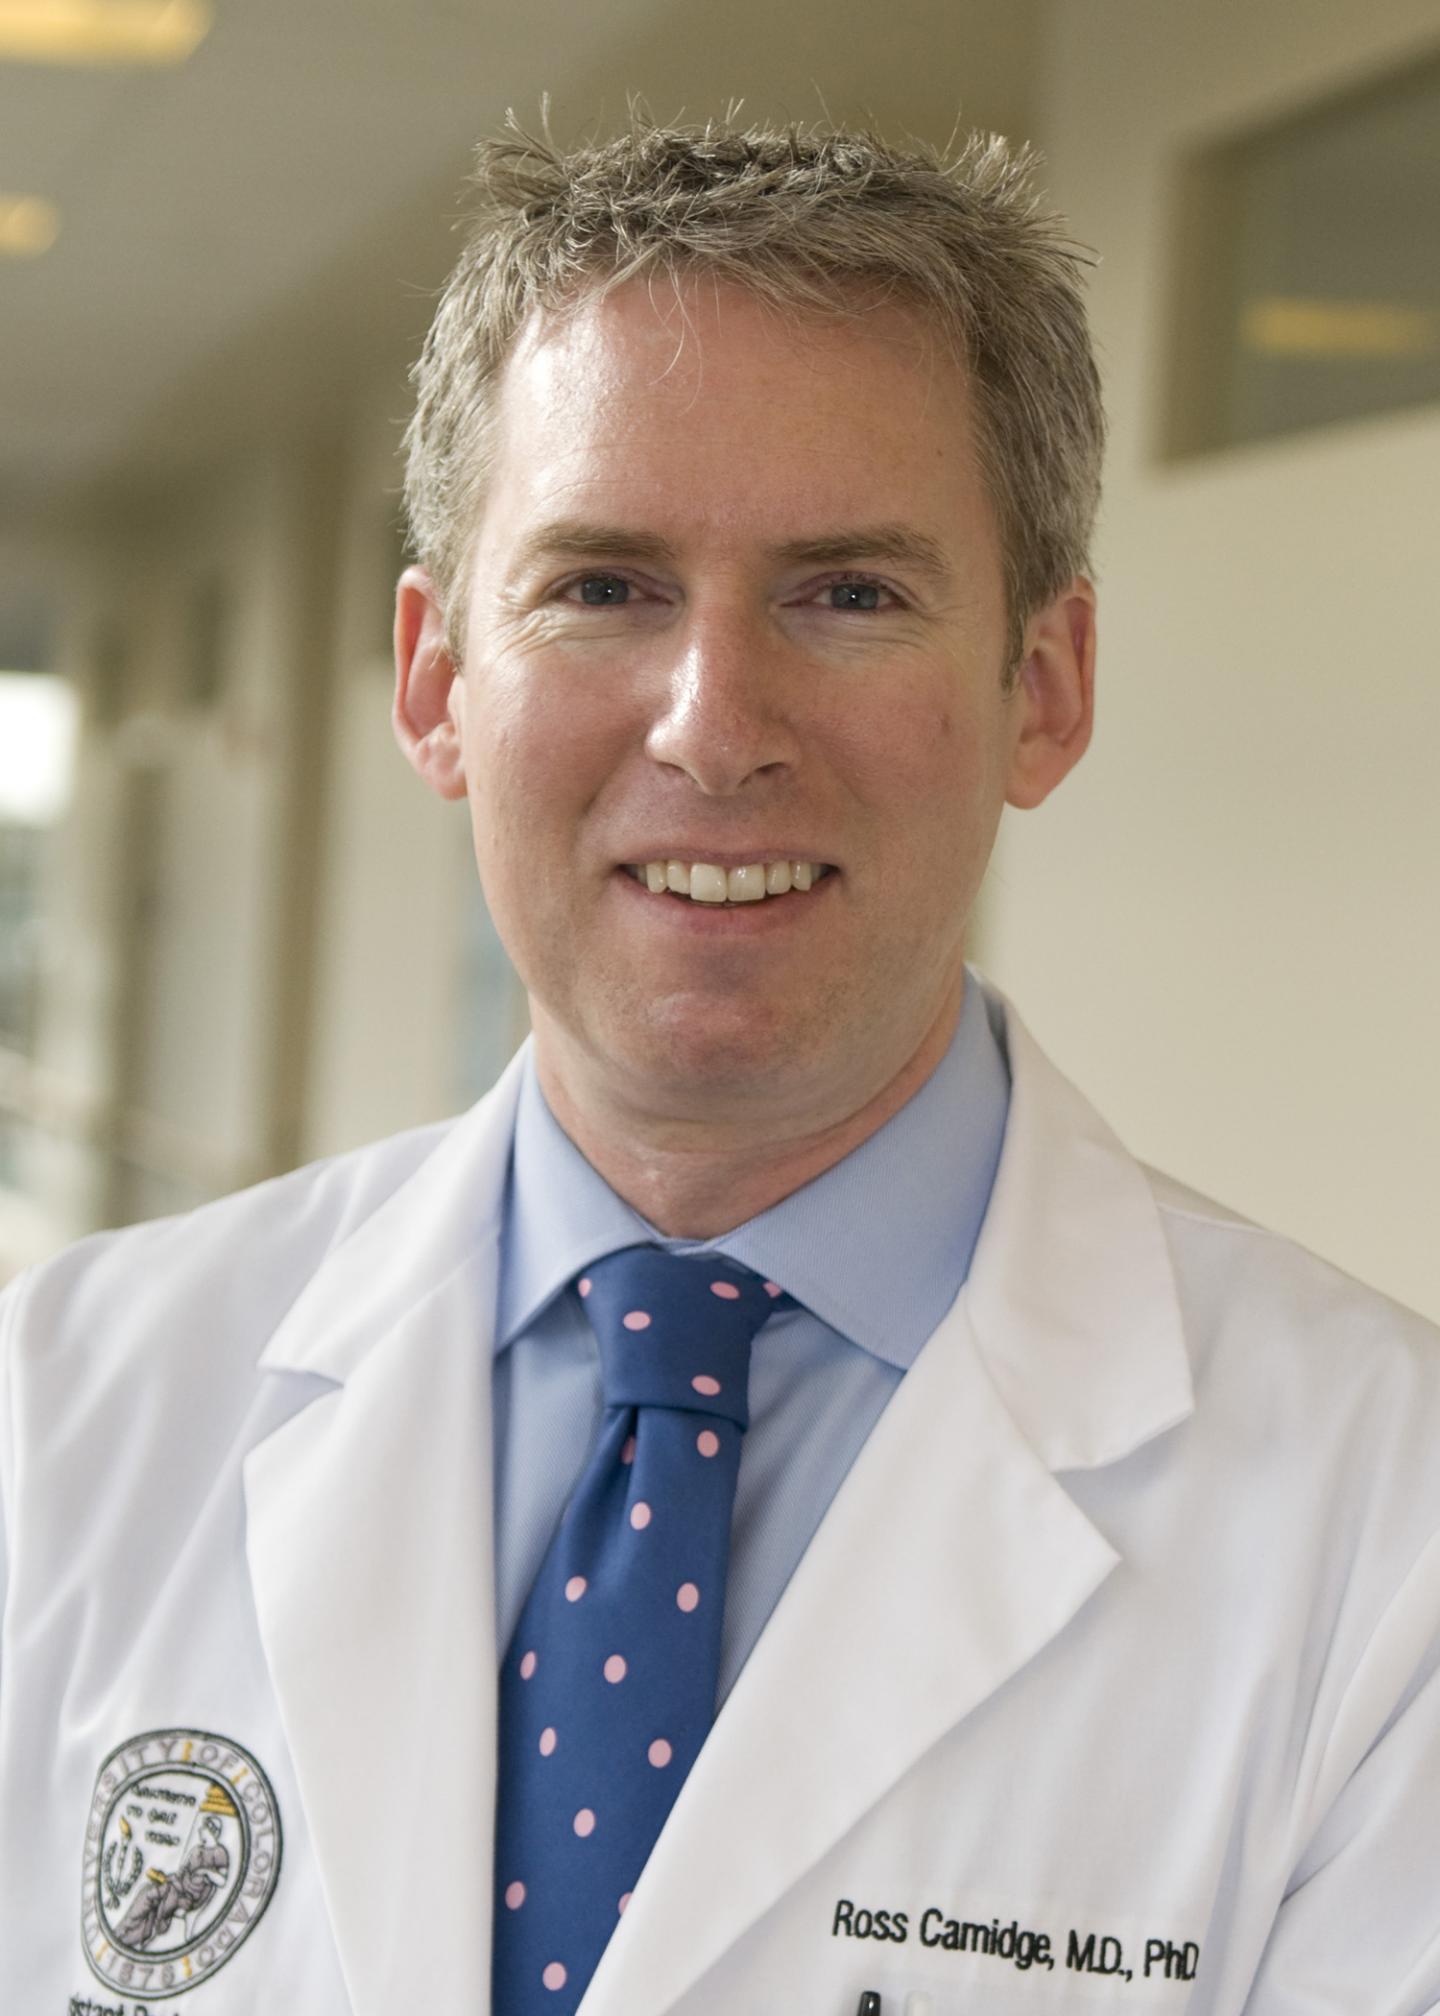 D. Ross Camidge, M.D., Ph.D., University of Colorado Cancer Center